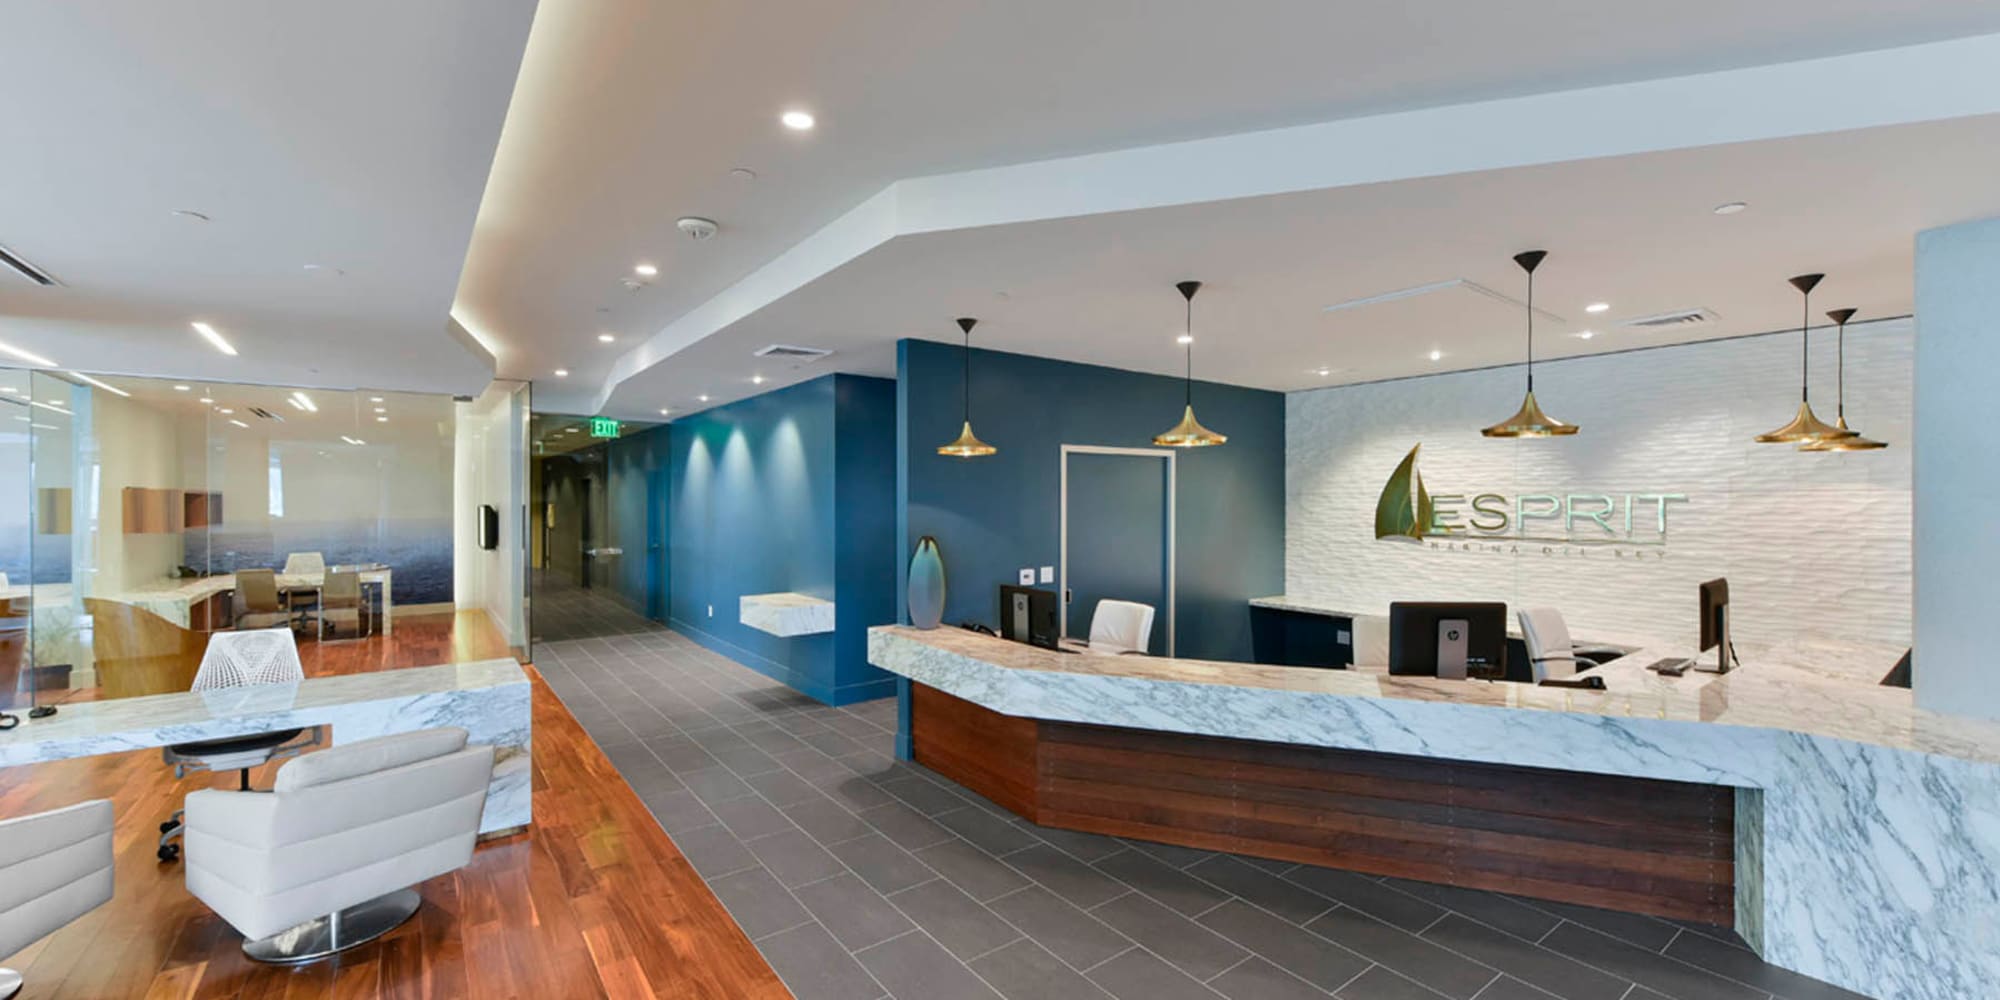 Expansive and welcoming lobby interior at Esprit Marina del Rey in Marina del Rey, California